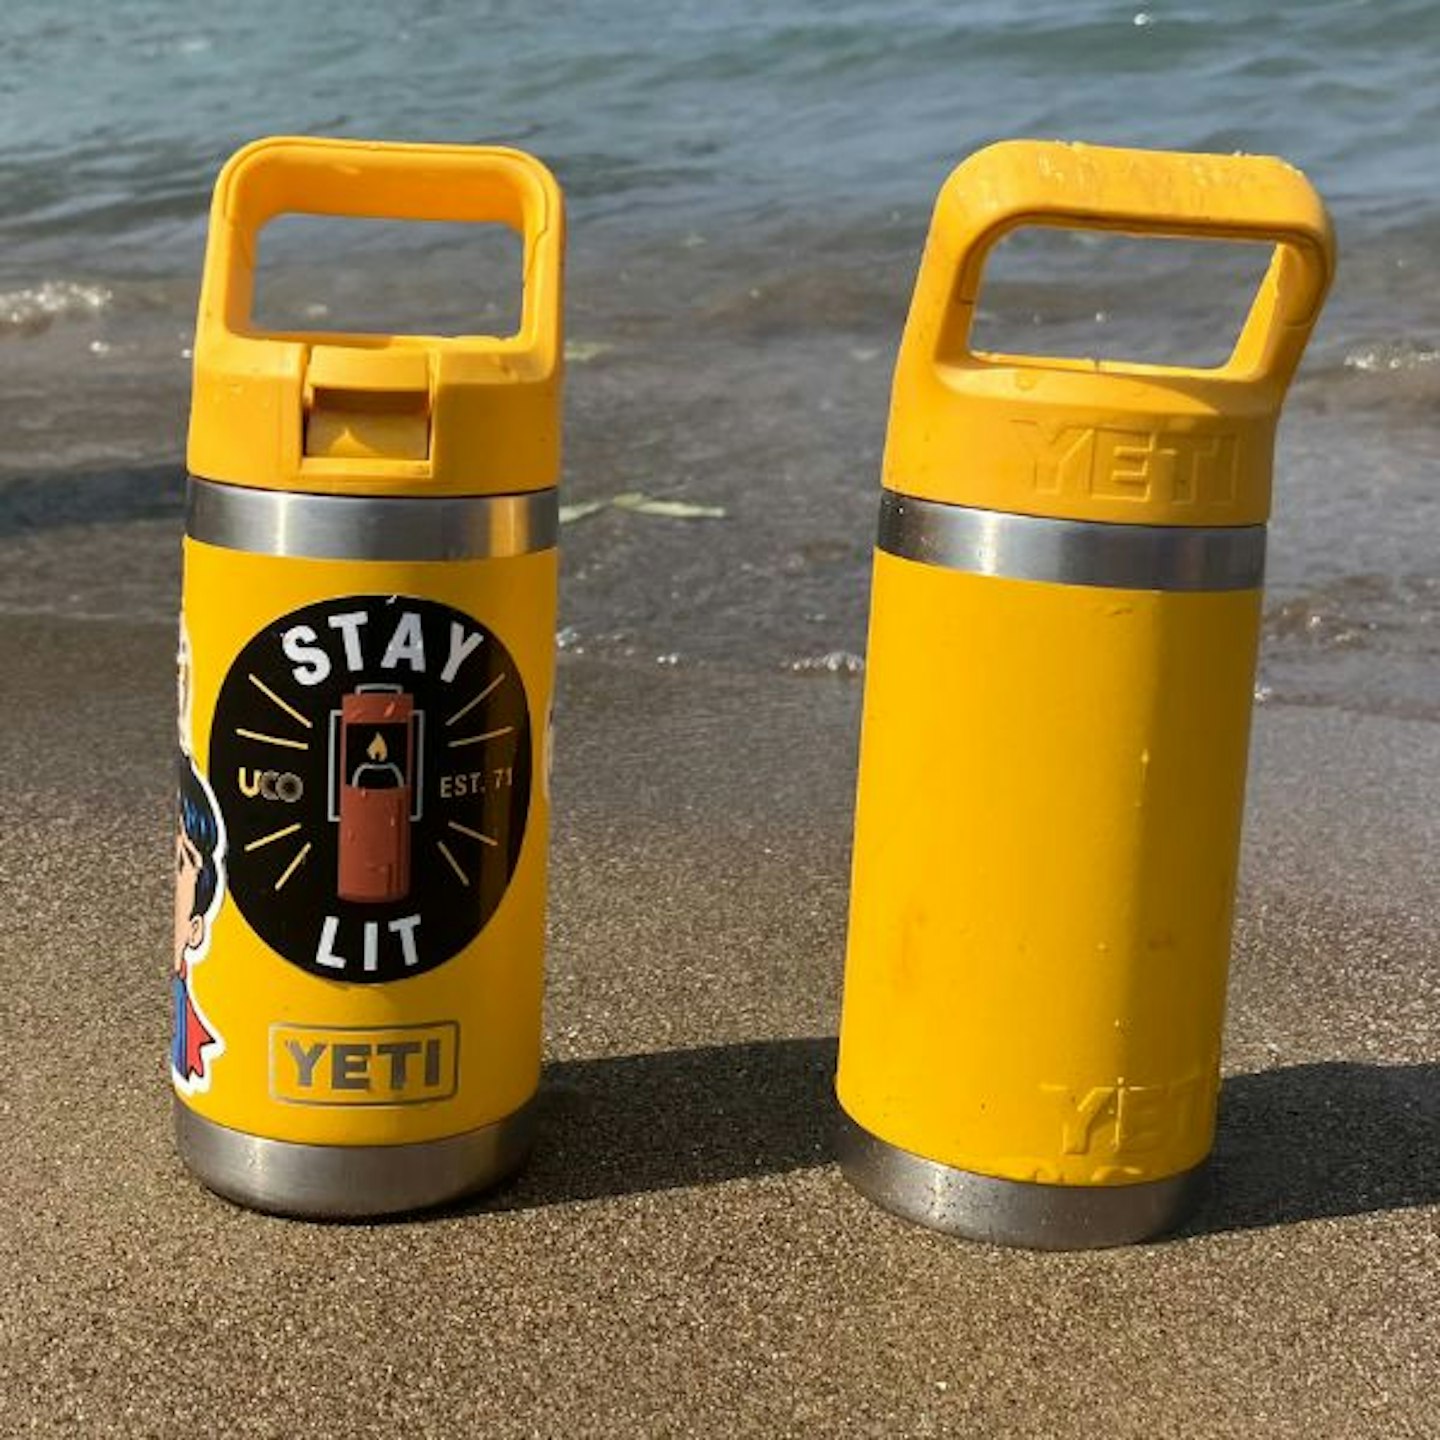 Yeti Rambler surpasses more popular Hydro Flask water bottle – The